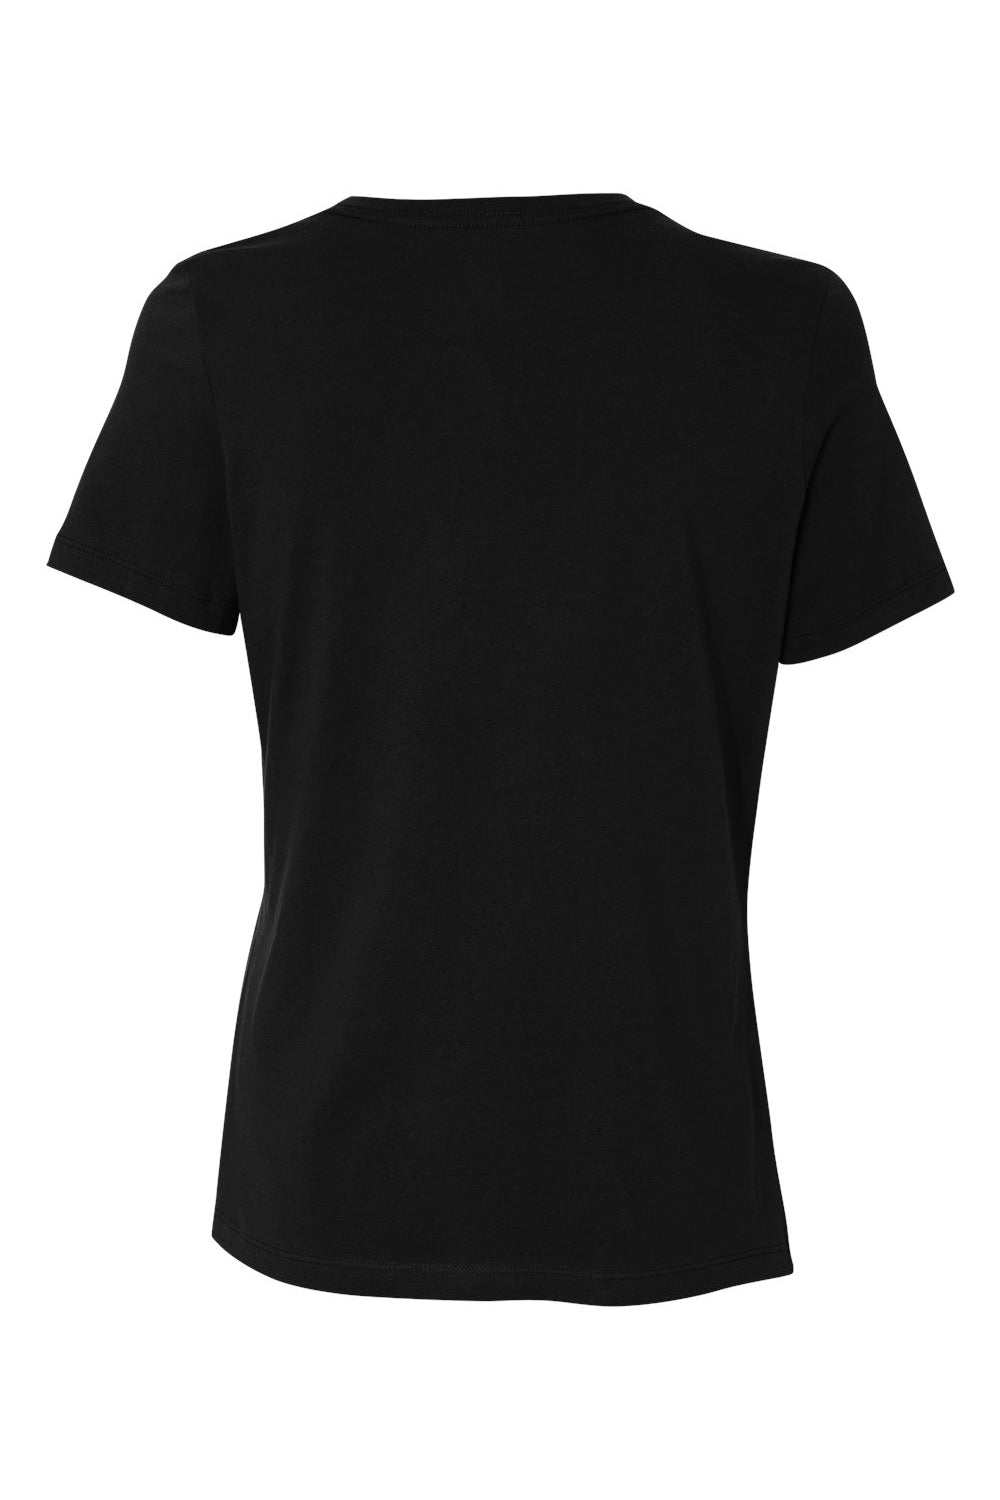 Bella + Canvas BC6400/B6400/6400 Womens Relaxed Jersey Short Sleeve Crewneck T-Shirt Black Flat Back